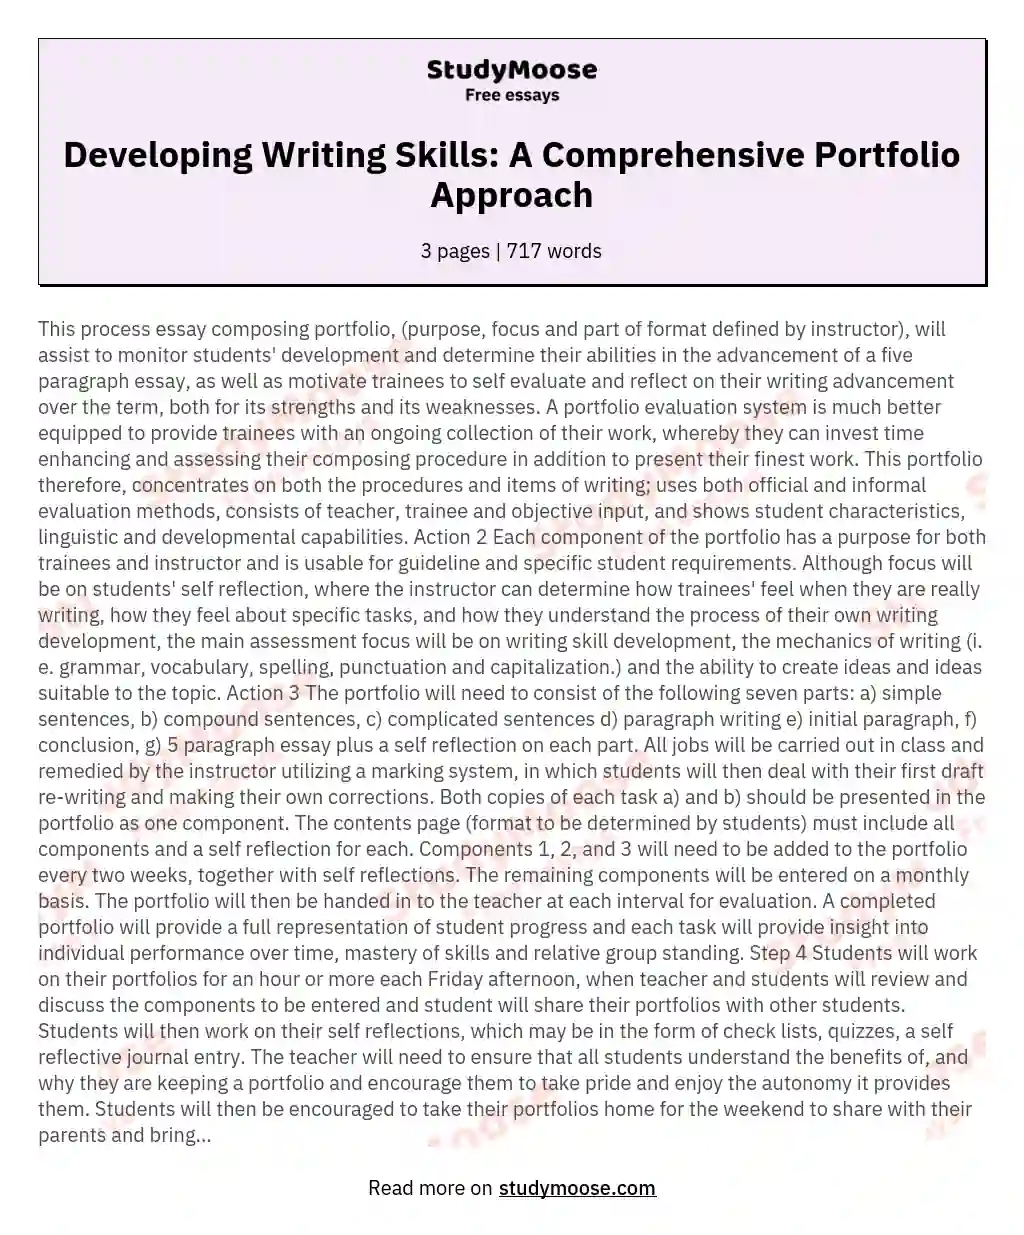 Developing Writing Skills: A Comprehensive Portfolio Approach essay